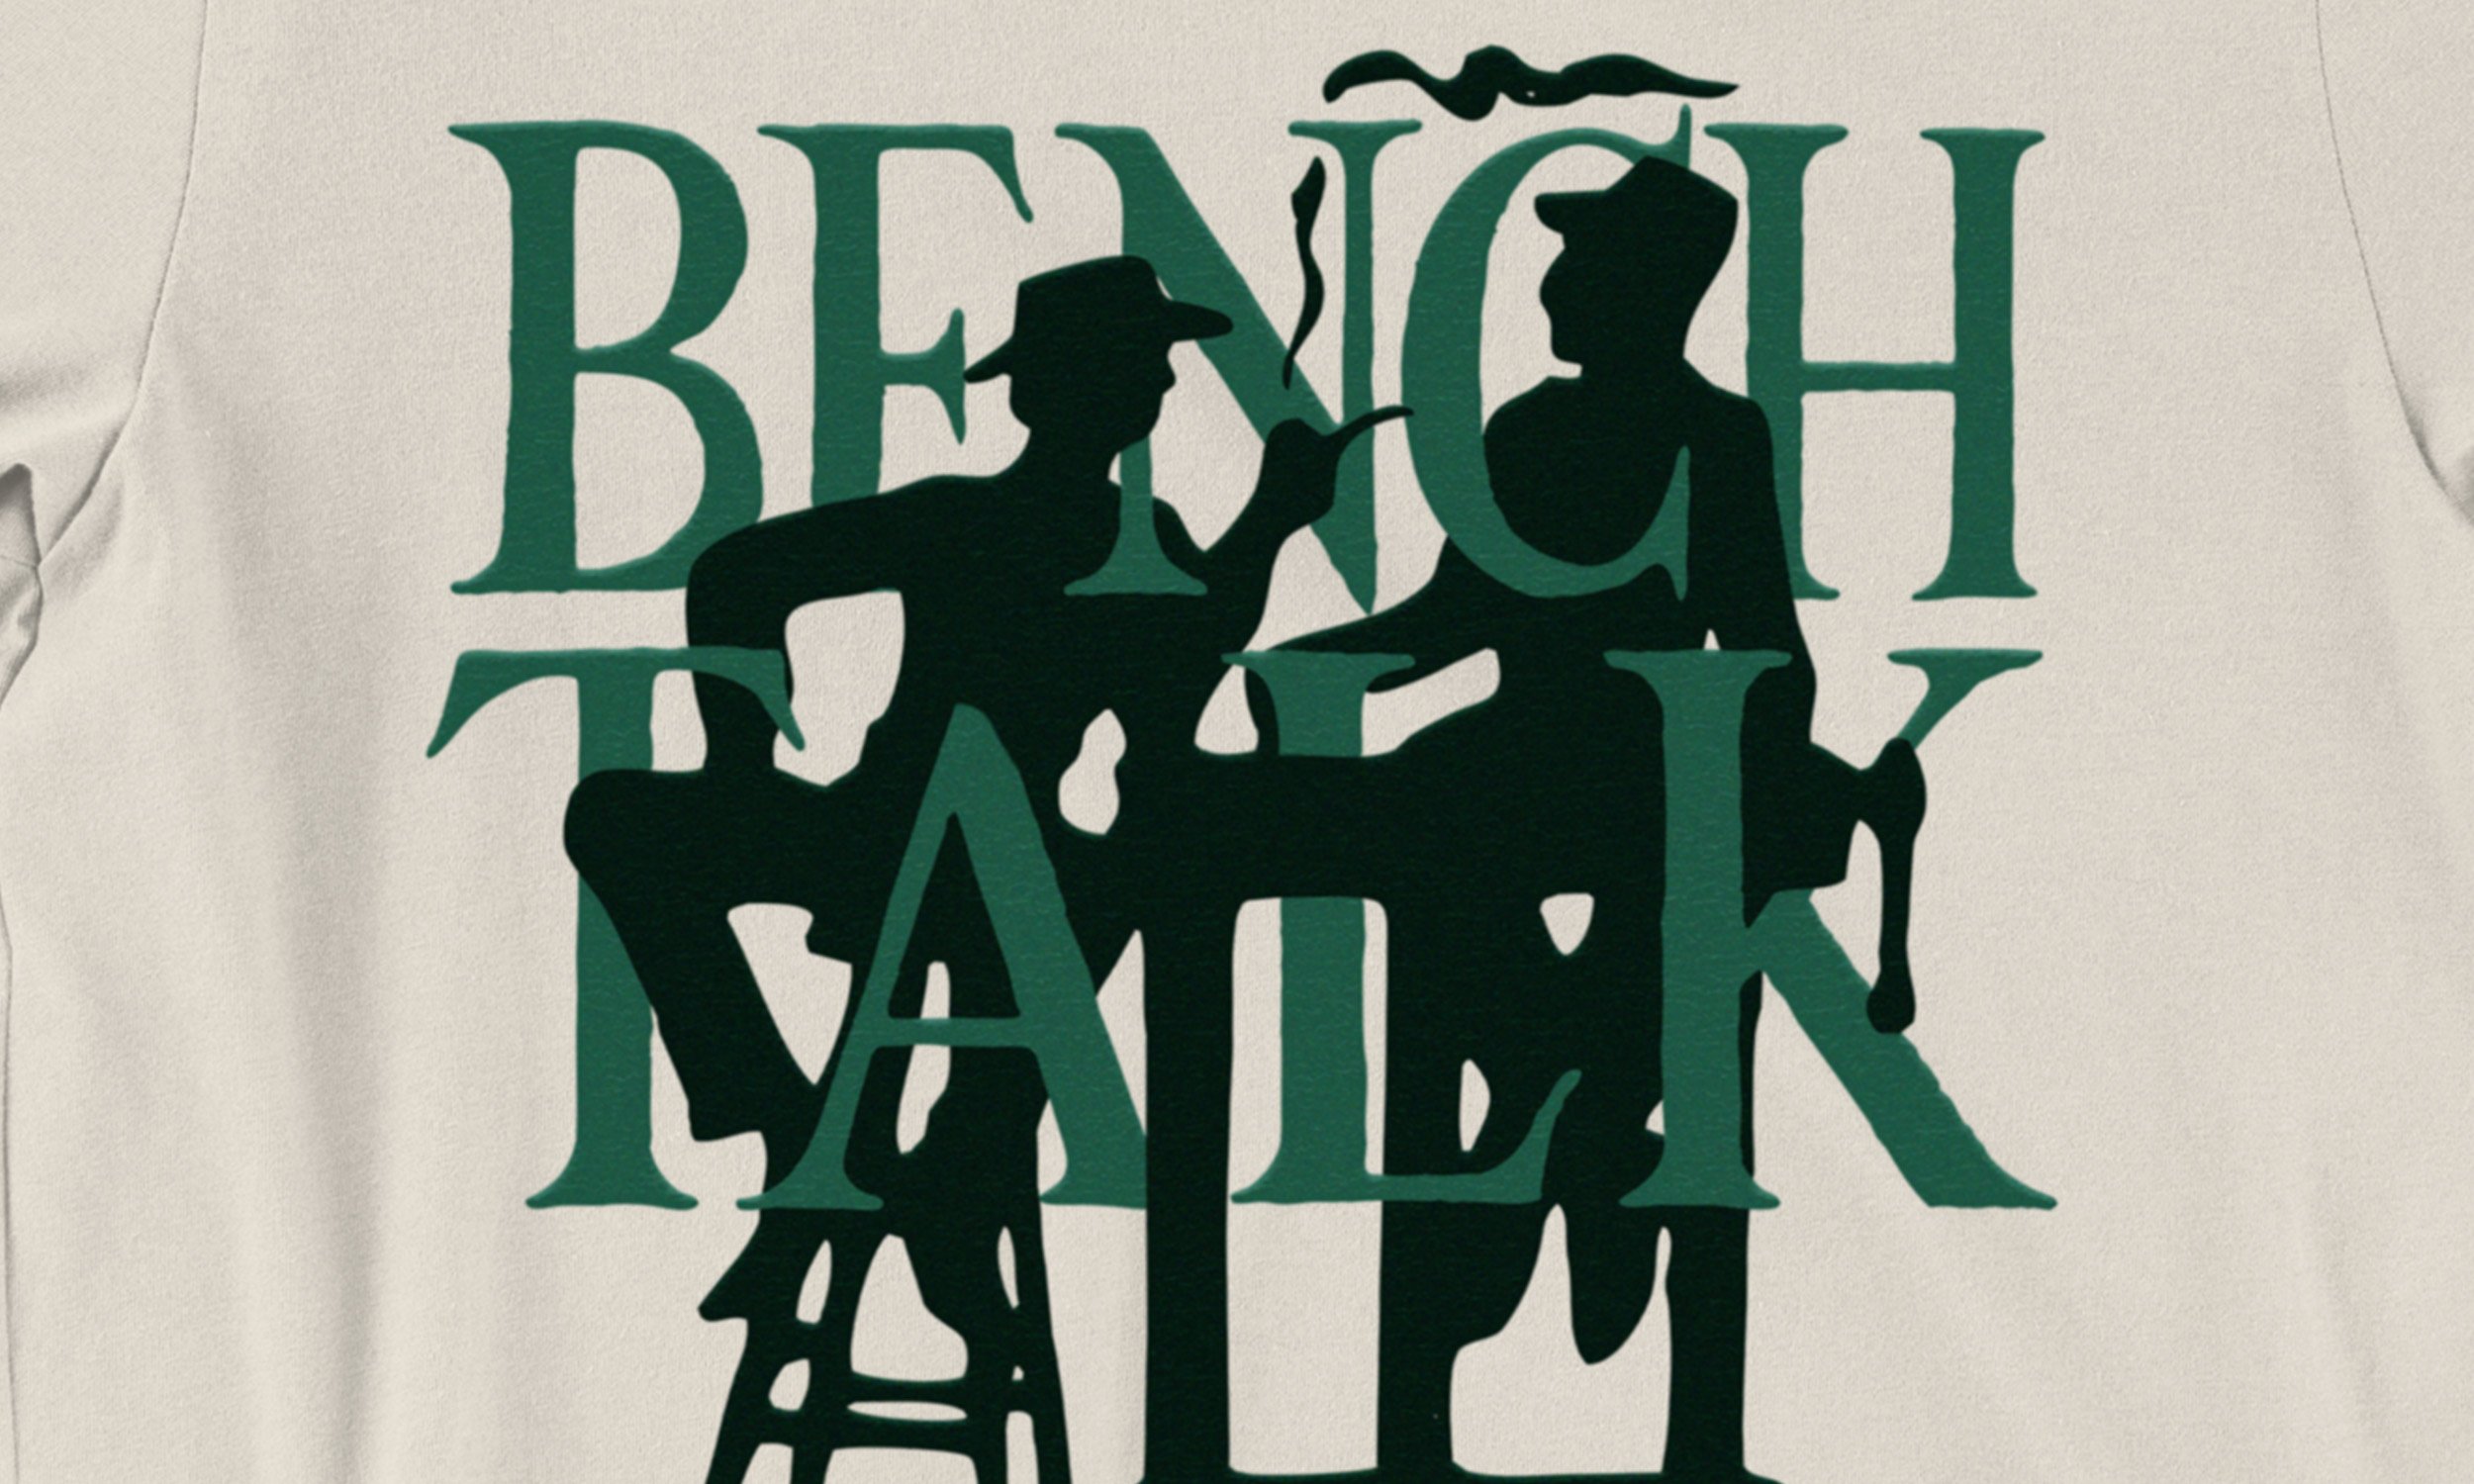   Bench Talk Gents:  A quick interwoven-lettering adaptation of the original Bench Talk newsletter masthead. 